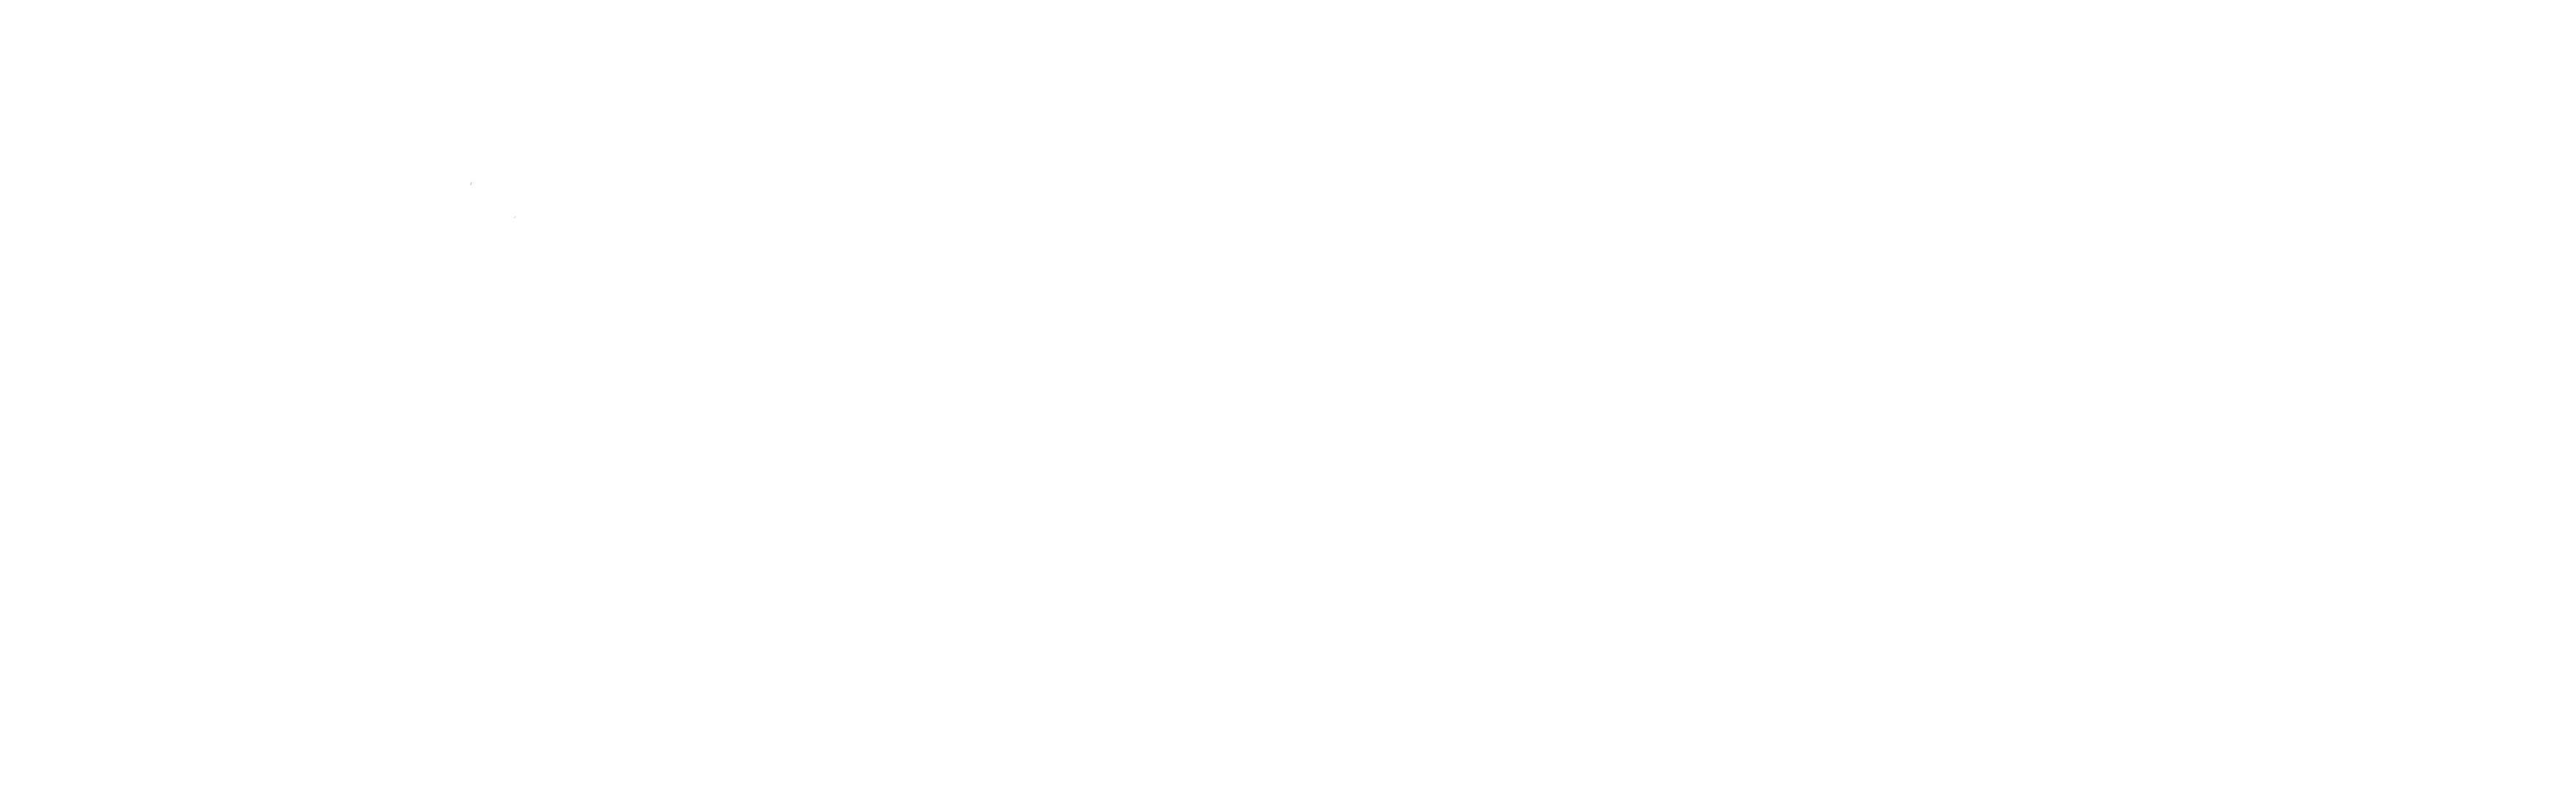 Logo_Zeichenfläche powered by